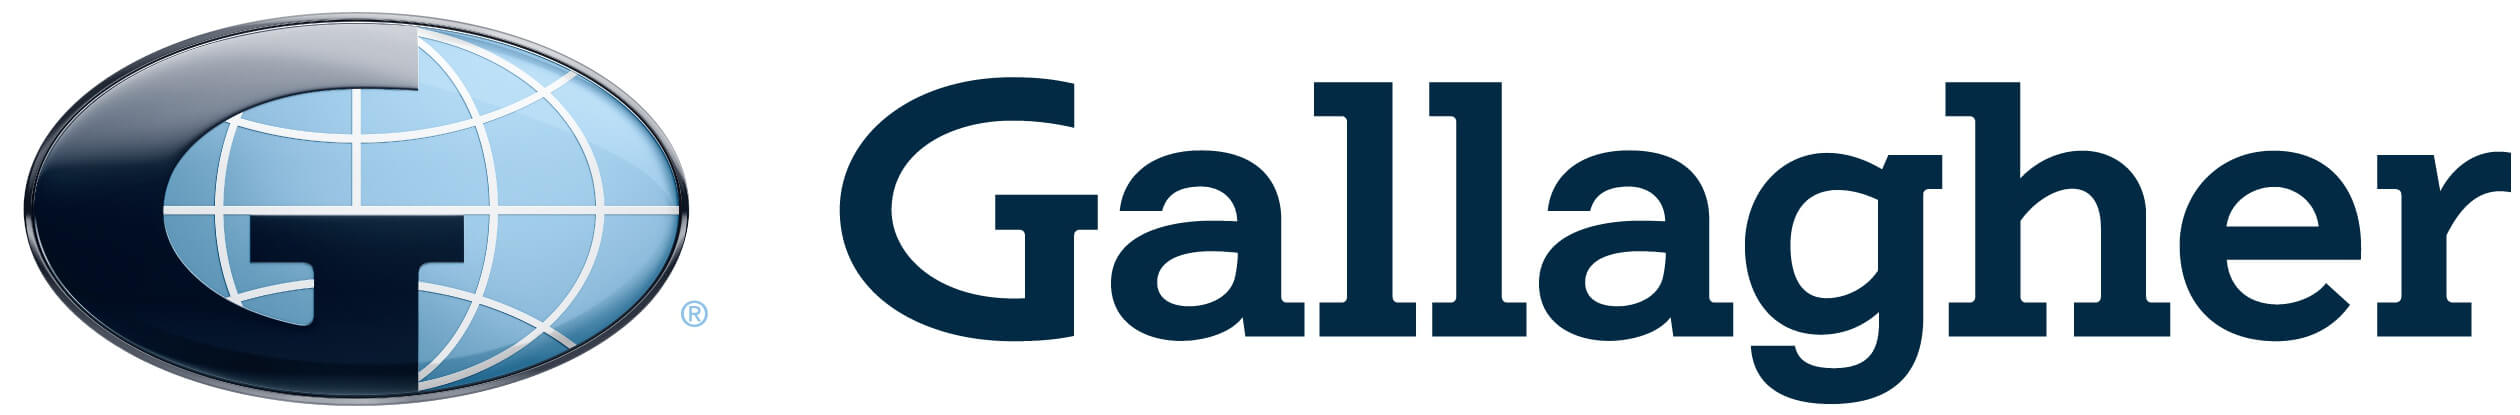 logo-gallagher-horizontal